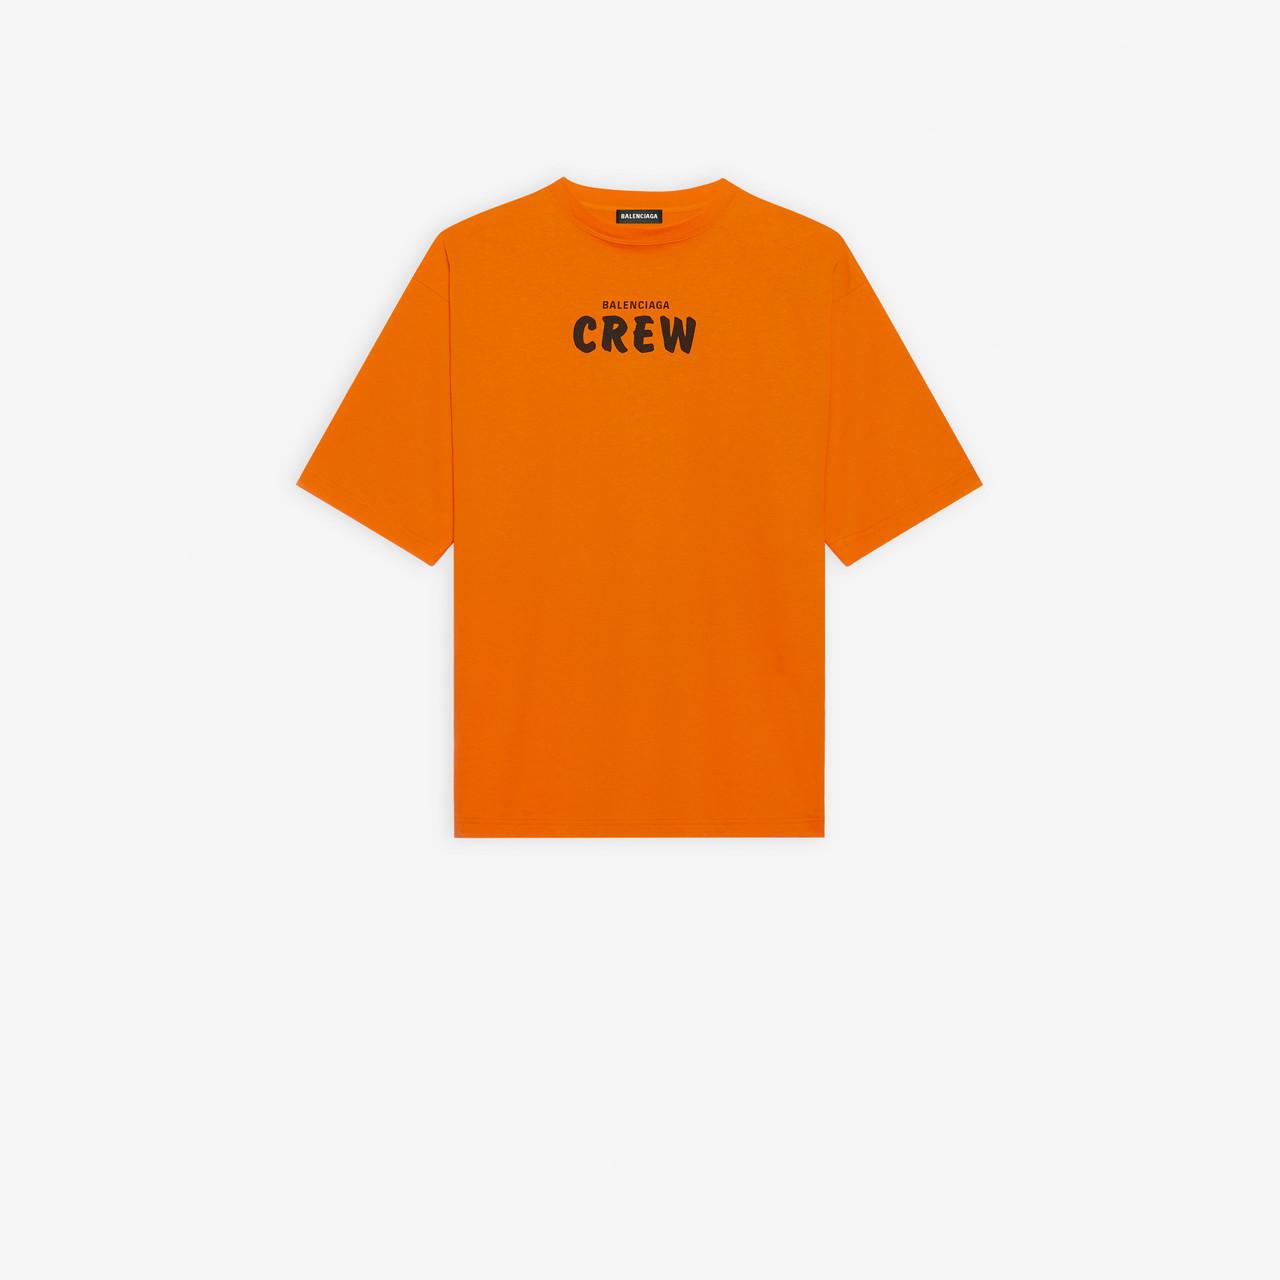 Balenciaga Crew Large Fit T-shirt in Orange/Black (Orange) for Men - Lyst